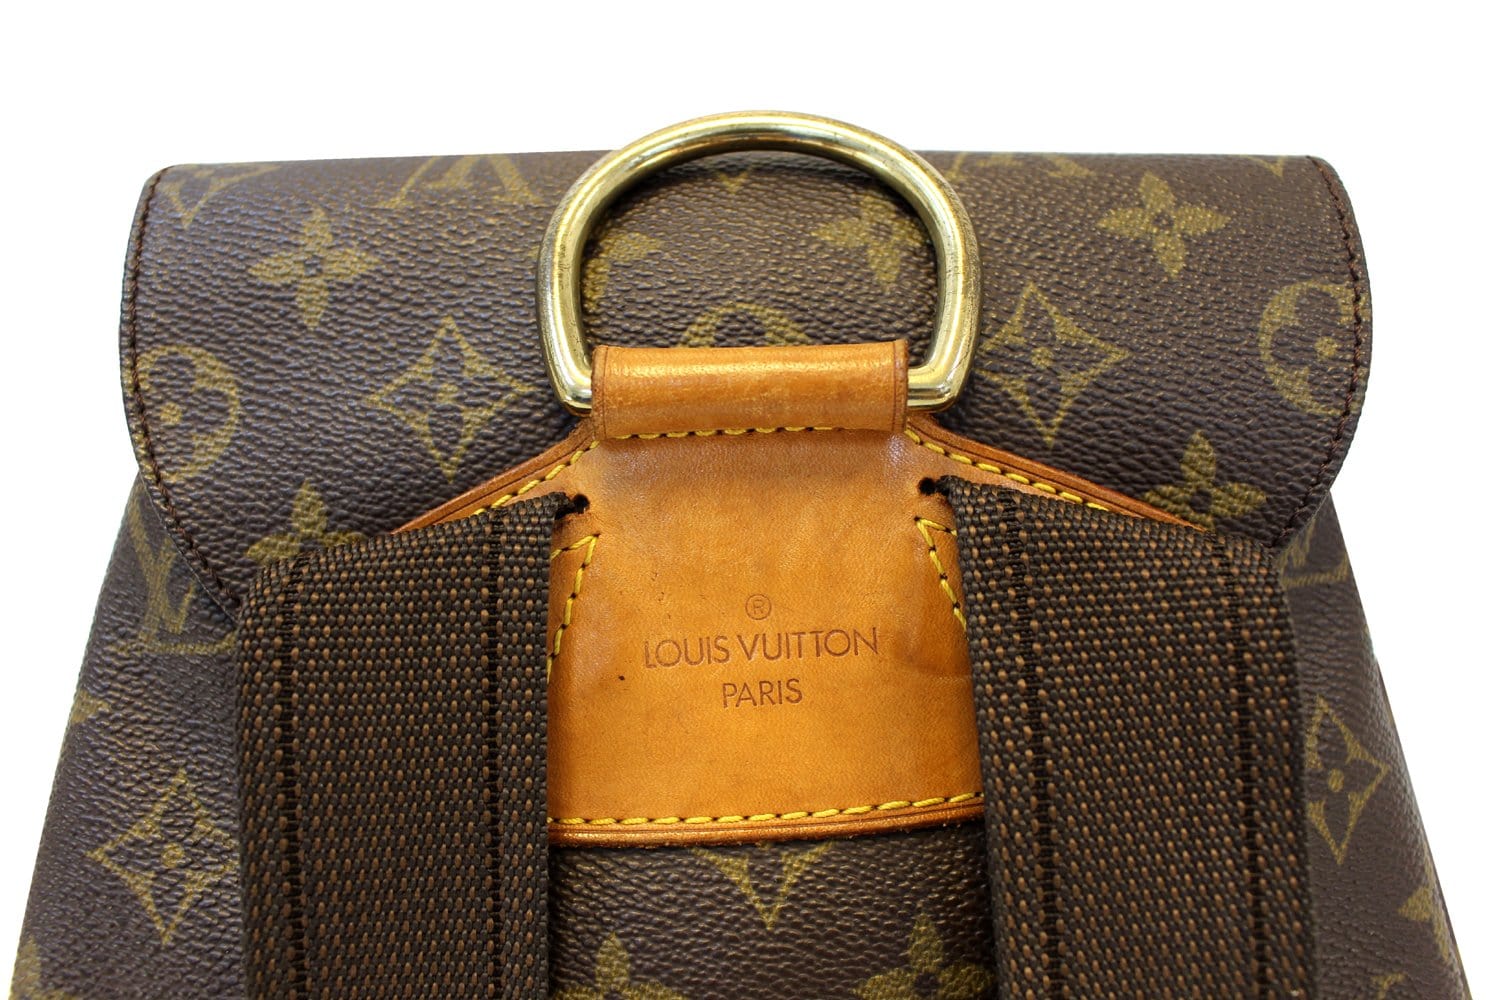 LOUIS VUITTON Women's Backpack Leather in Orange